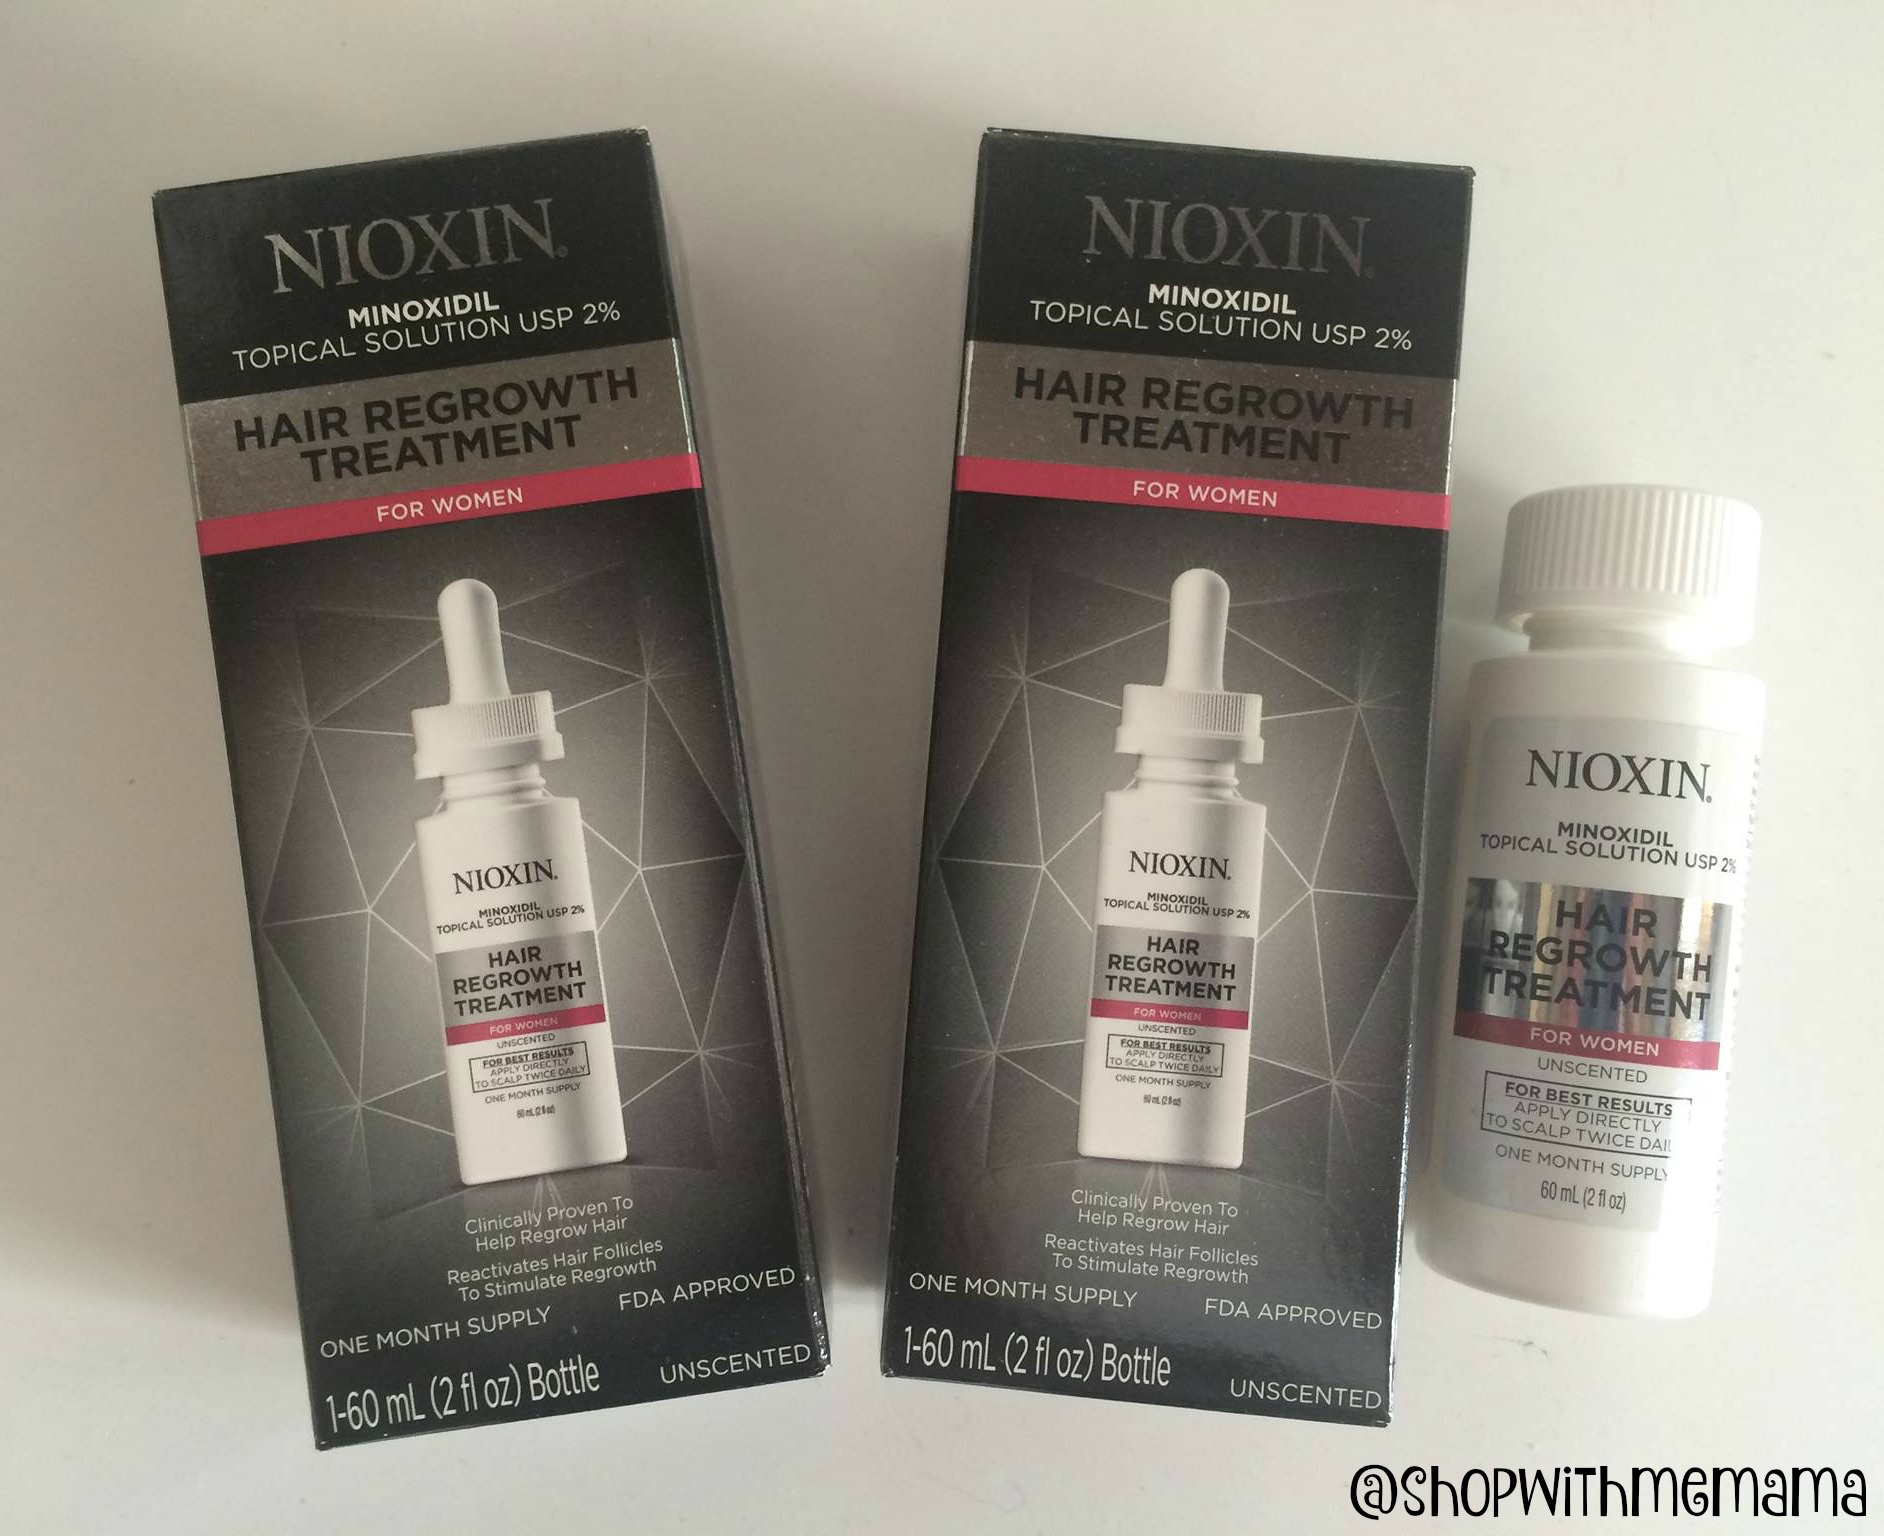 Nioxin is a Hair Regrowth Treatment for Women 